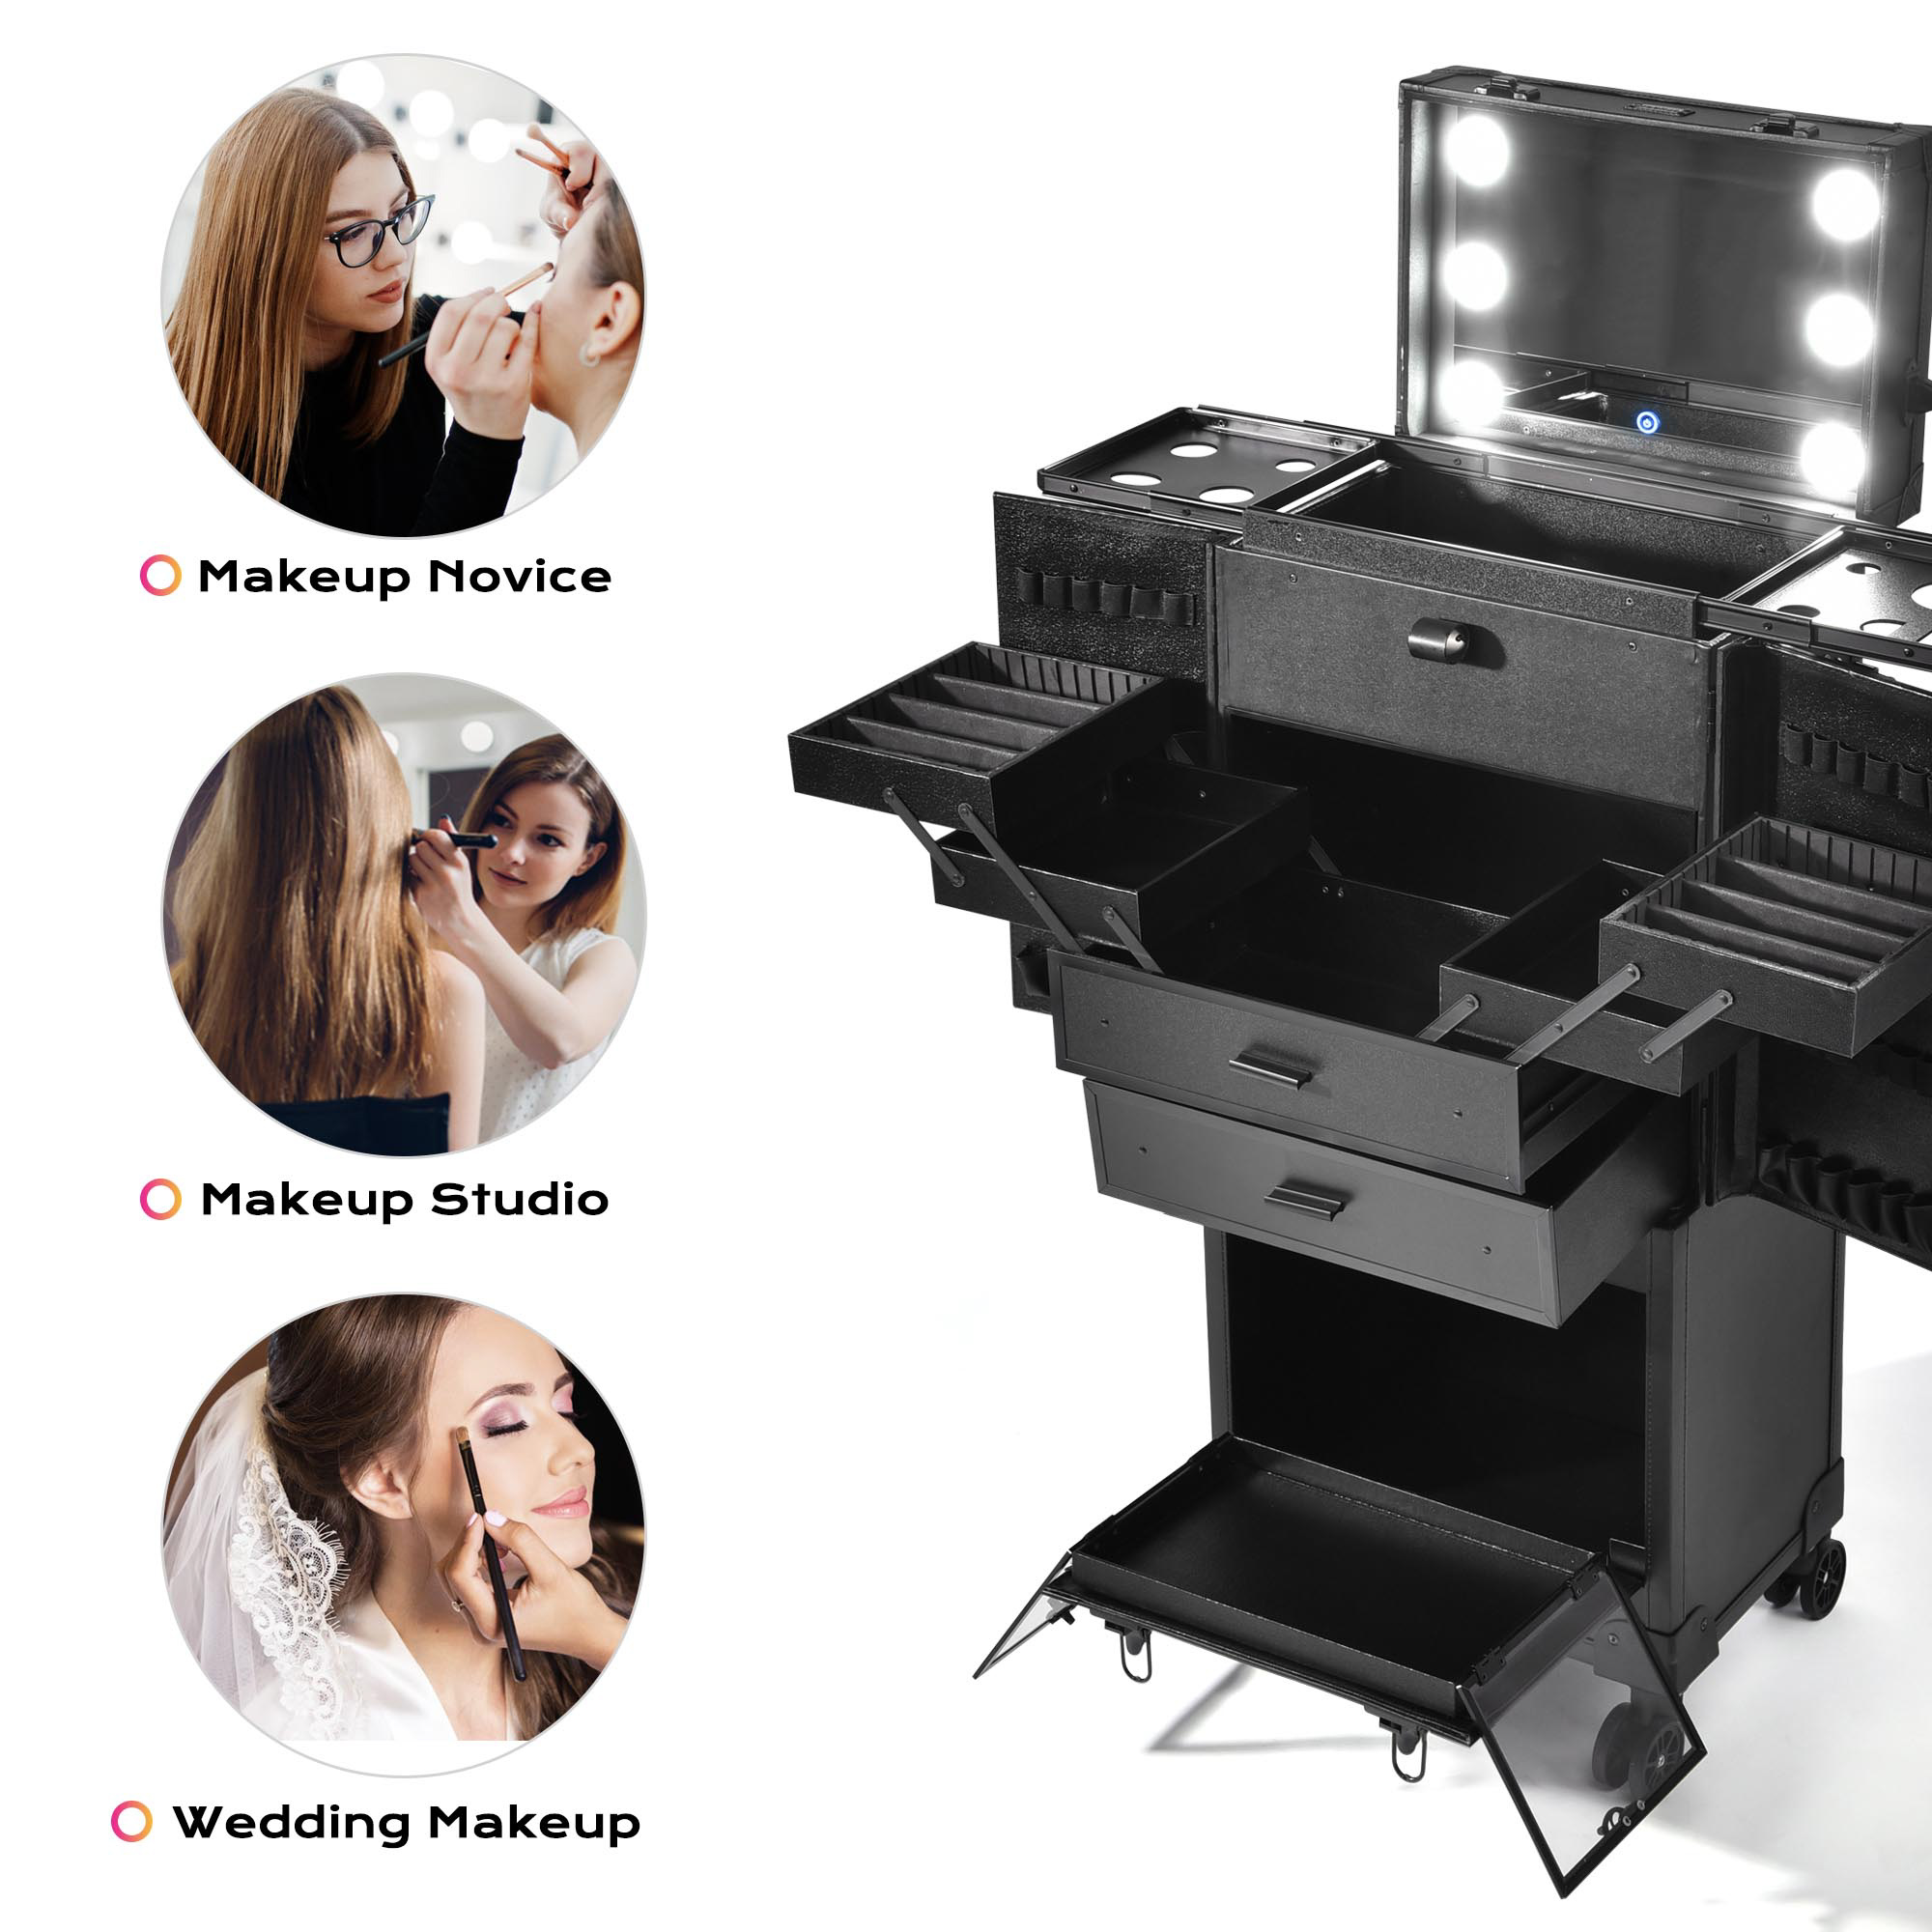 Byootique ® Pro Rolling Makeup Case Aritist Cosmetics w/ Lights Mirror Studio Black